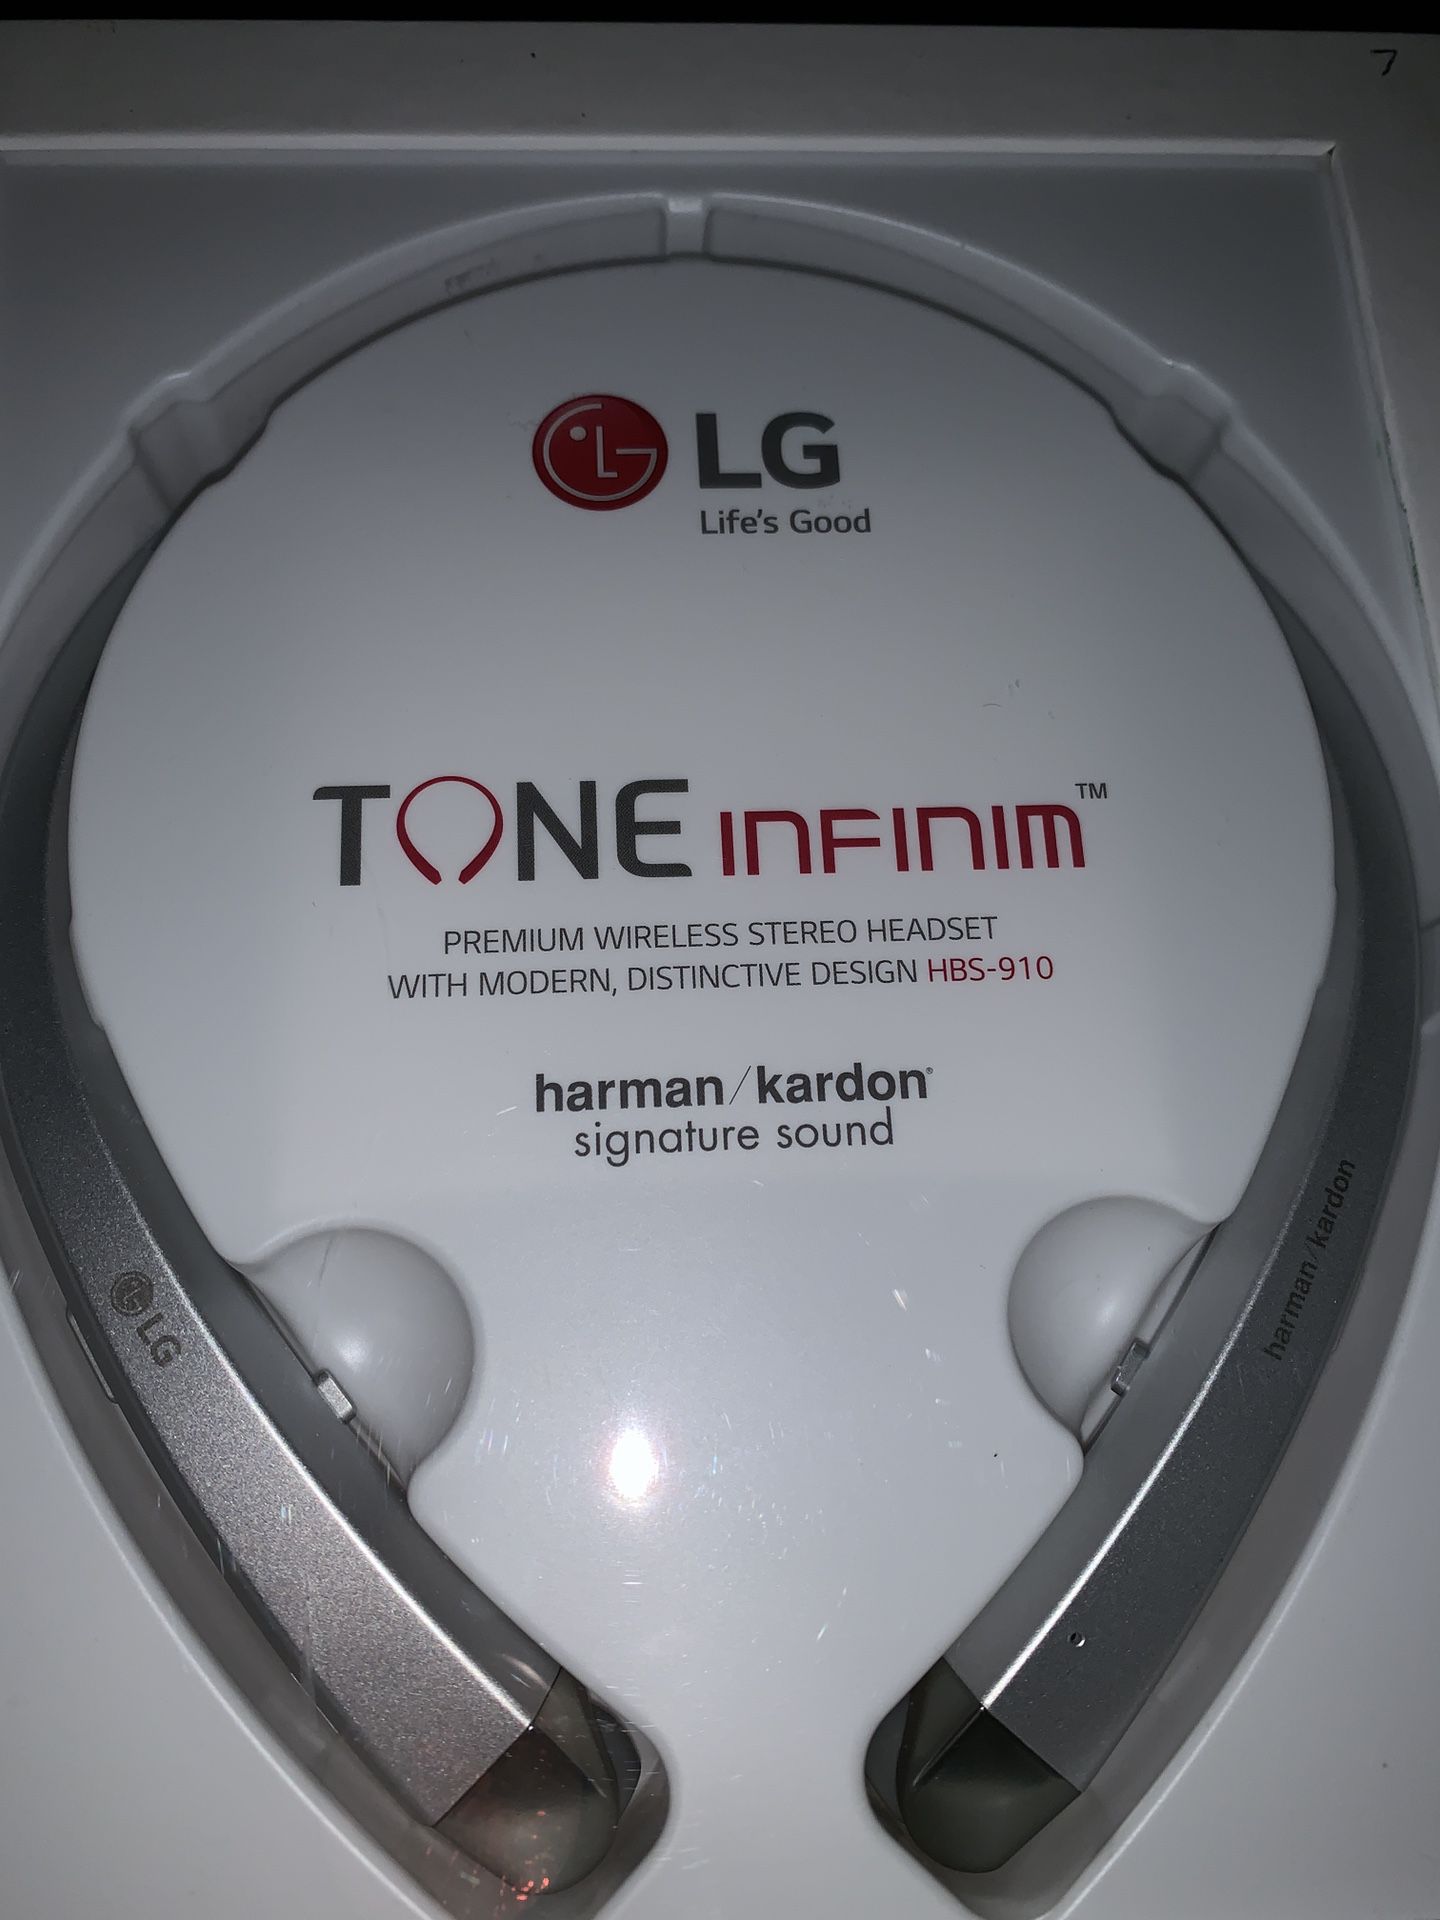 LG TONE infinim has 910 - Silver